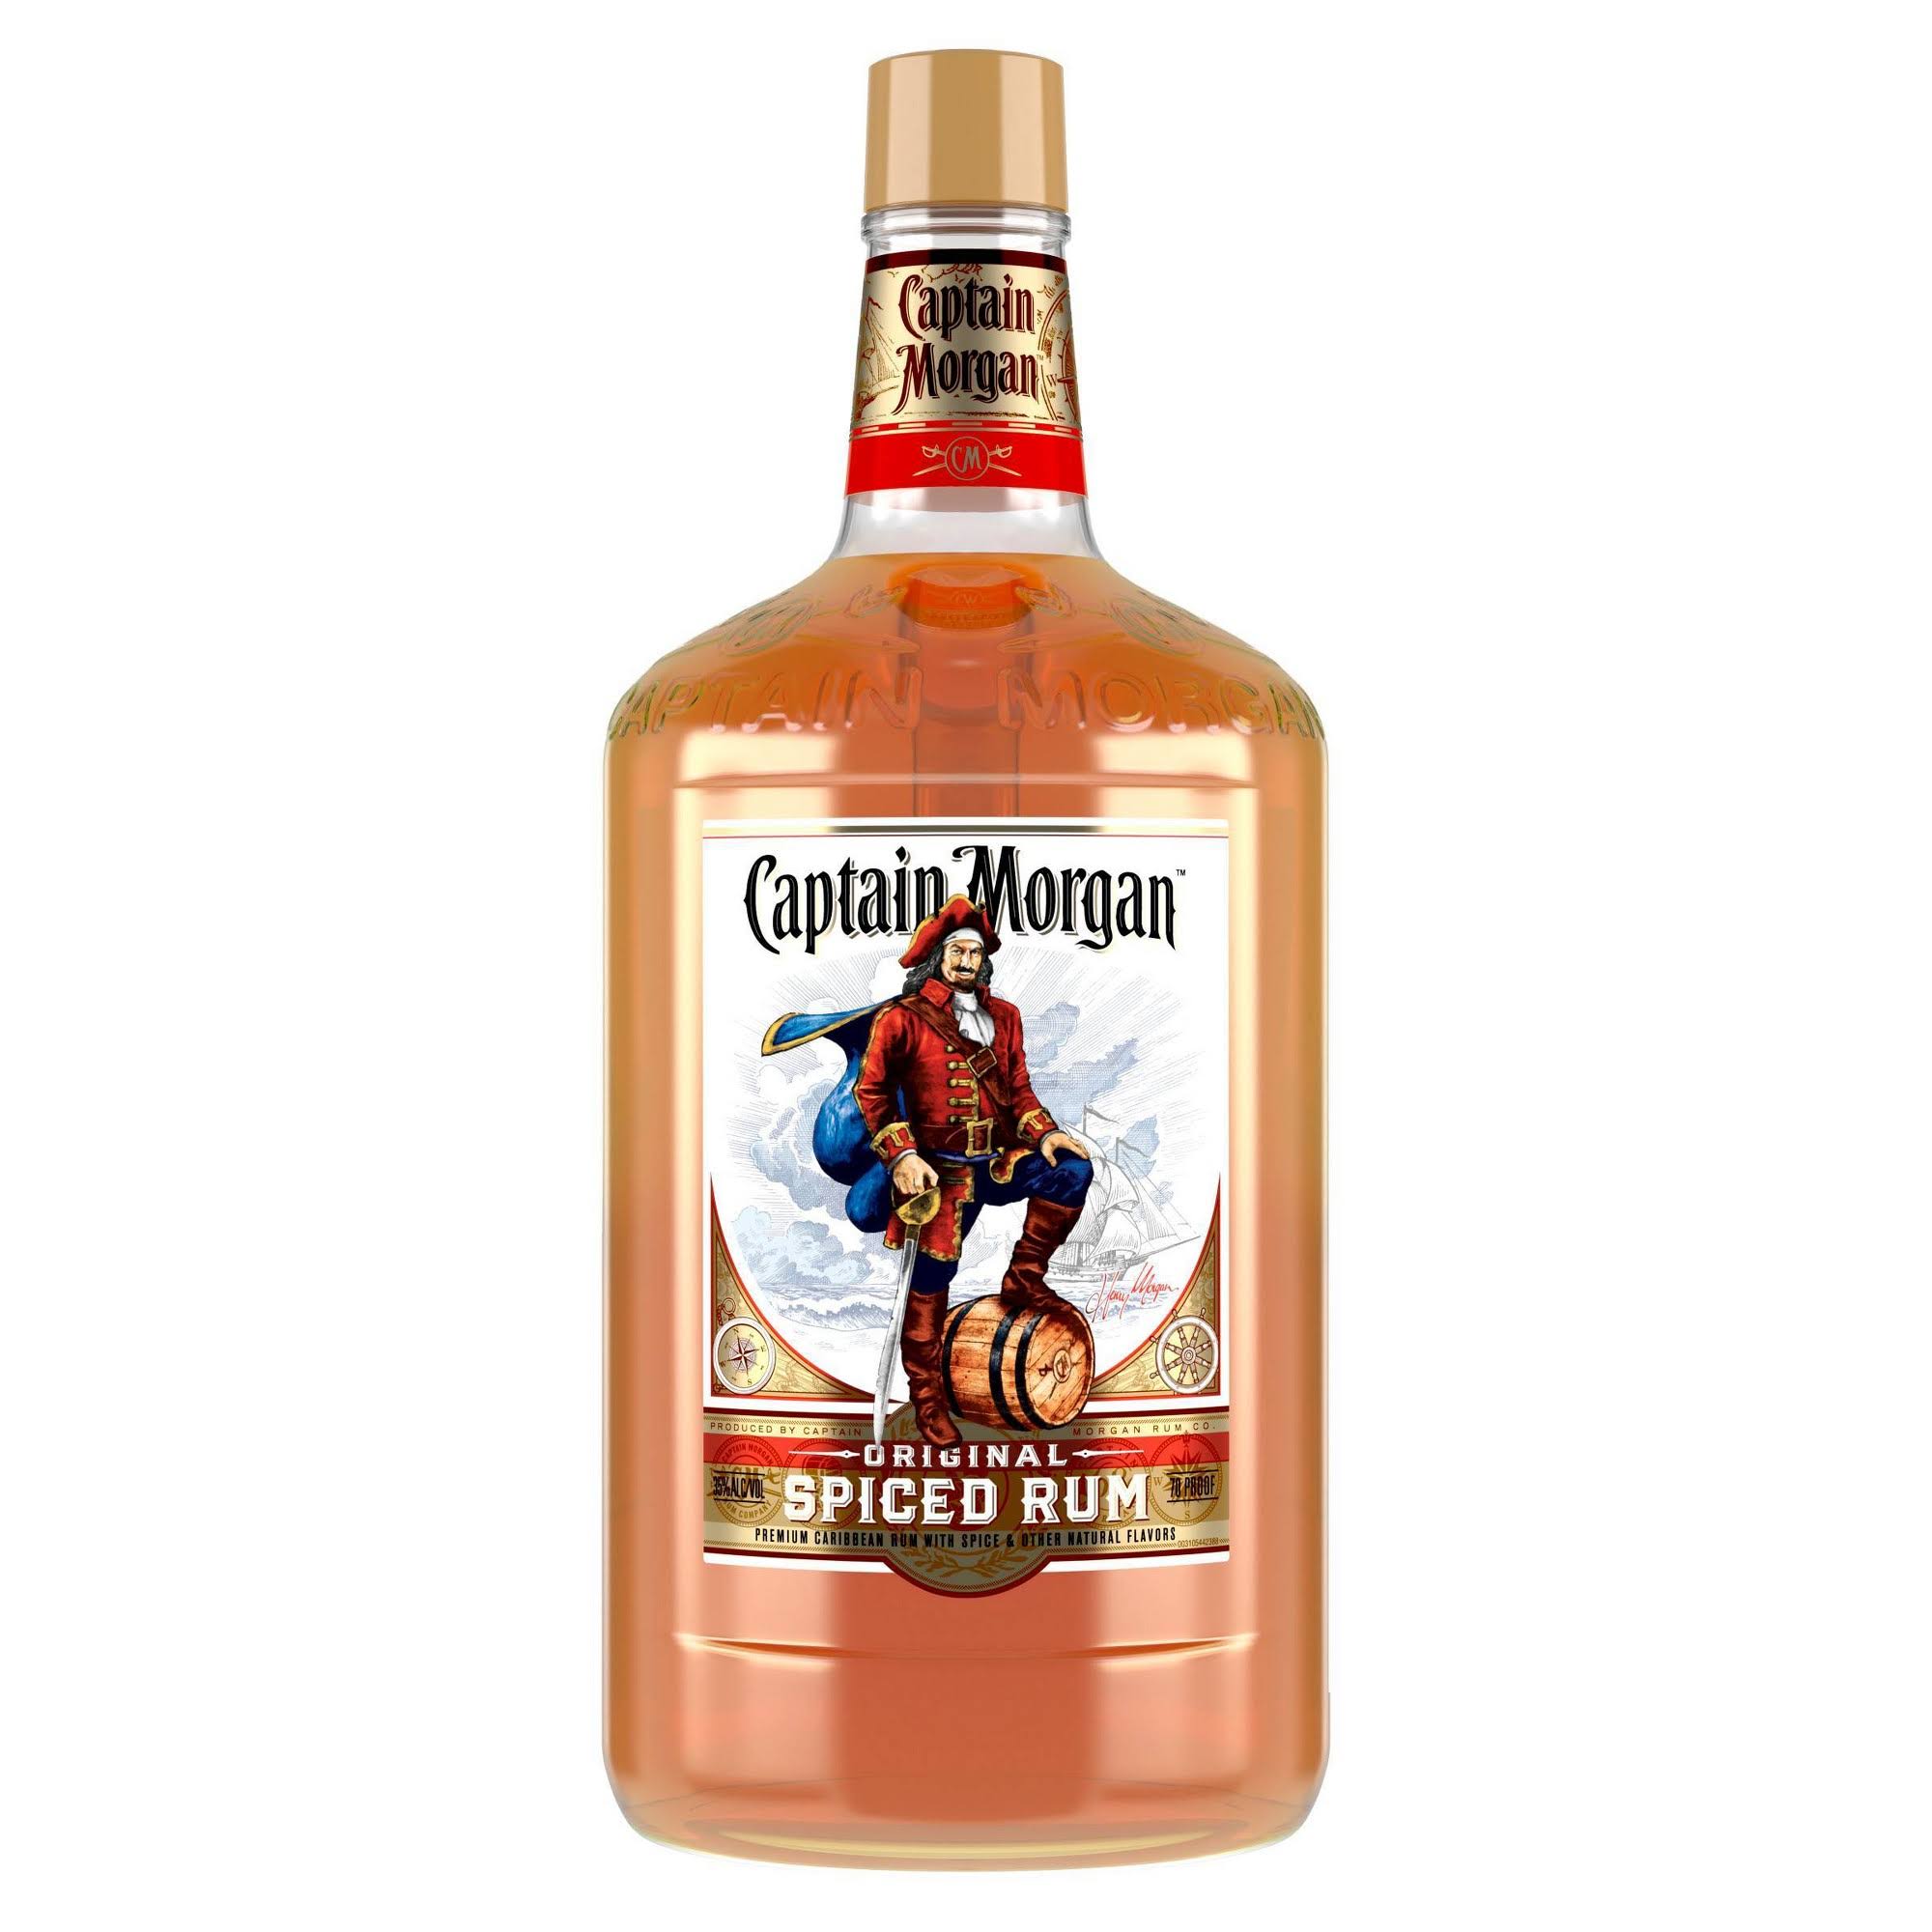 Captain Morgan Rum, Spiced, Original - 1.75 l ON SALE $24.99